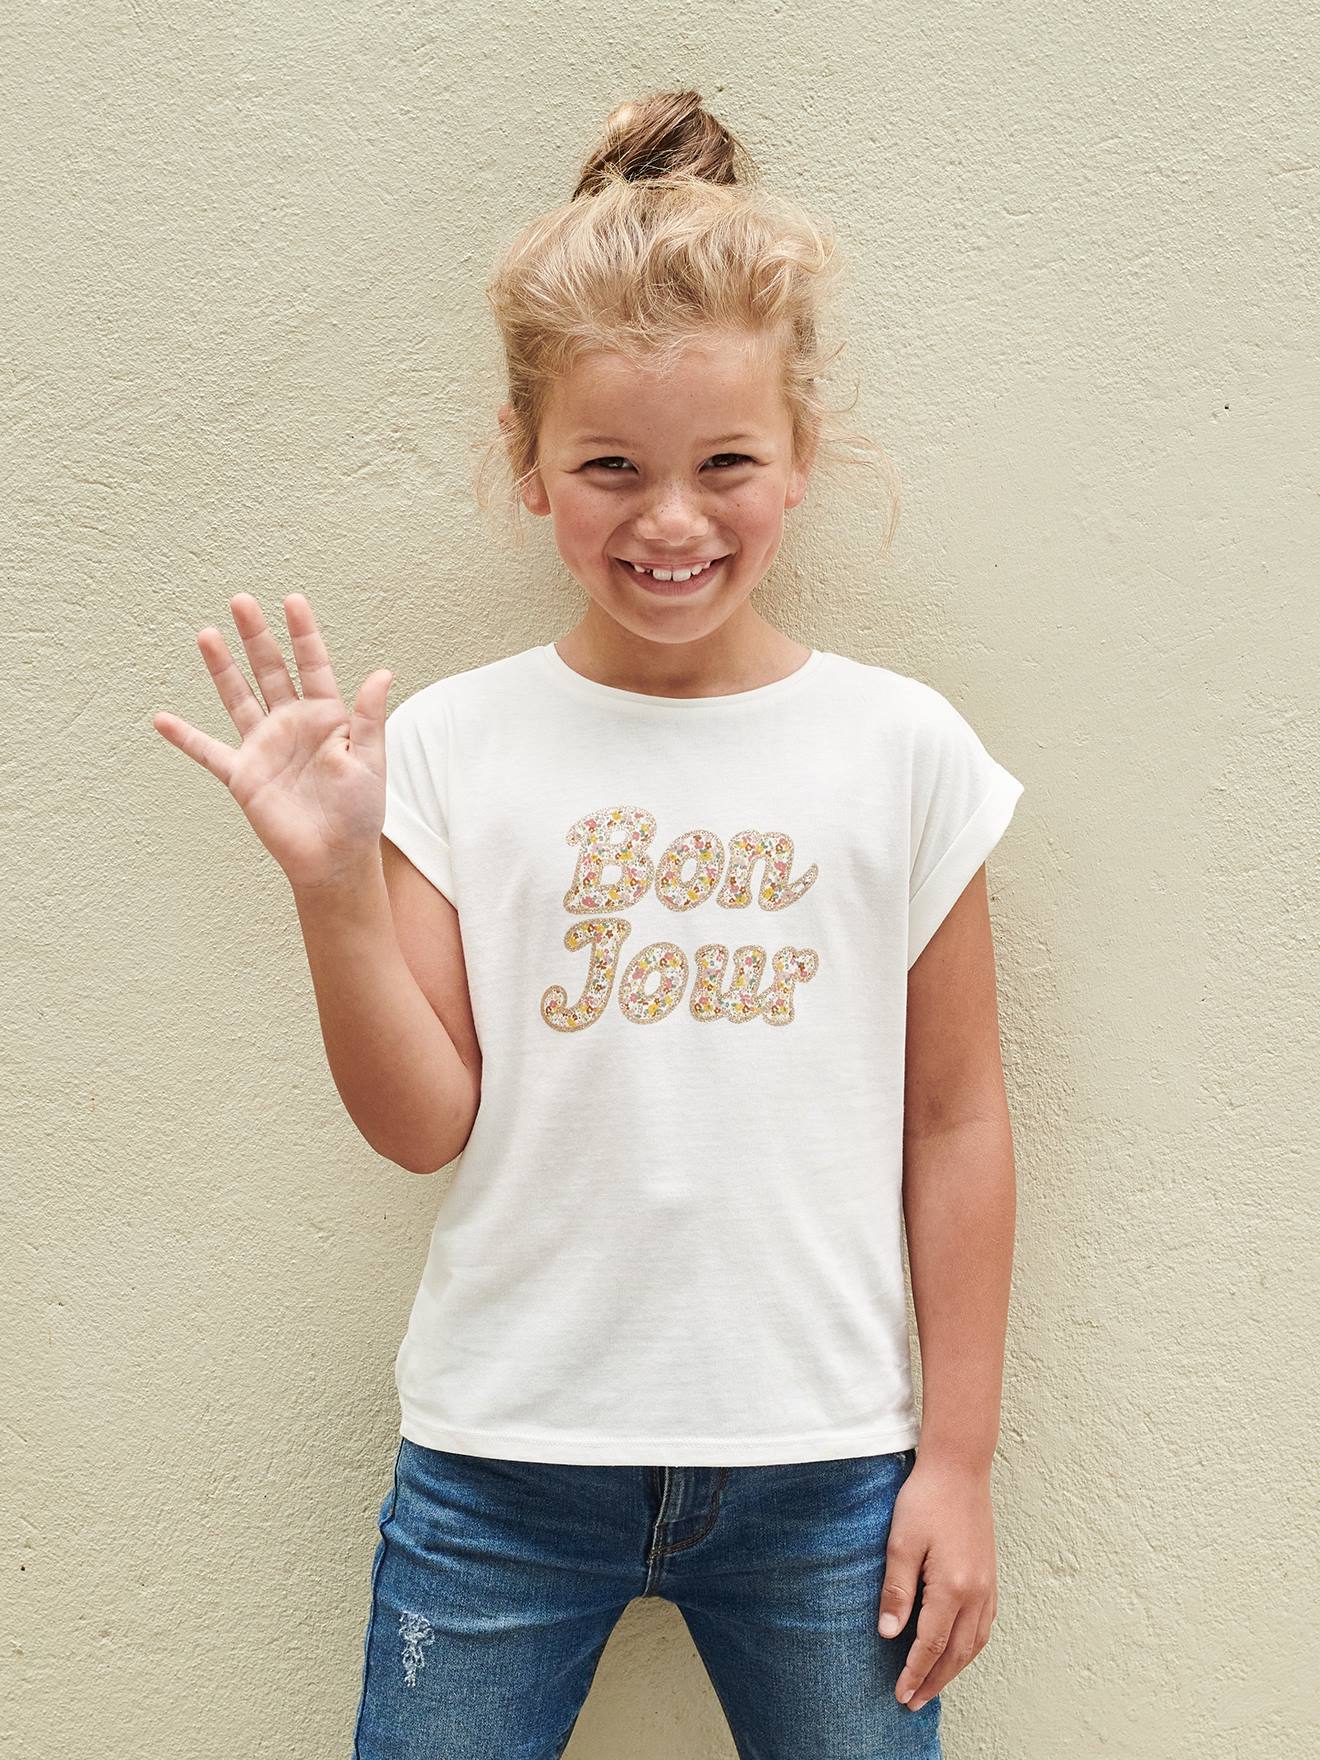 T-Shirt with Message in Flower Motifs for Girls - navy blue, Girls